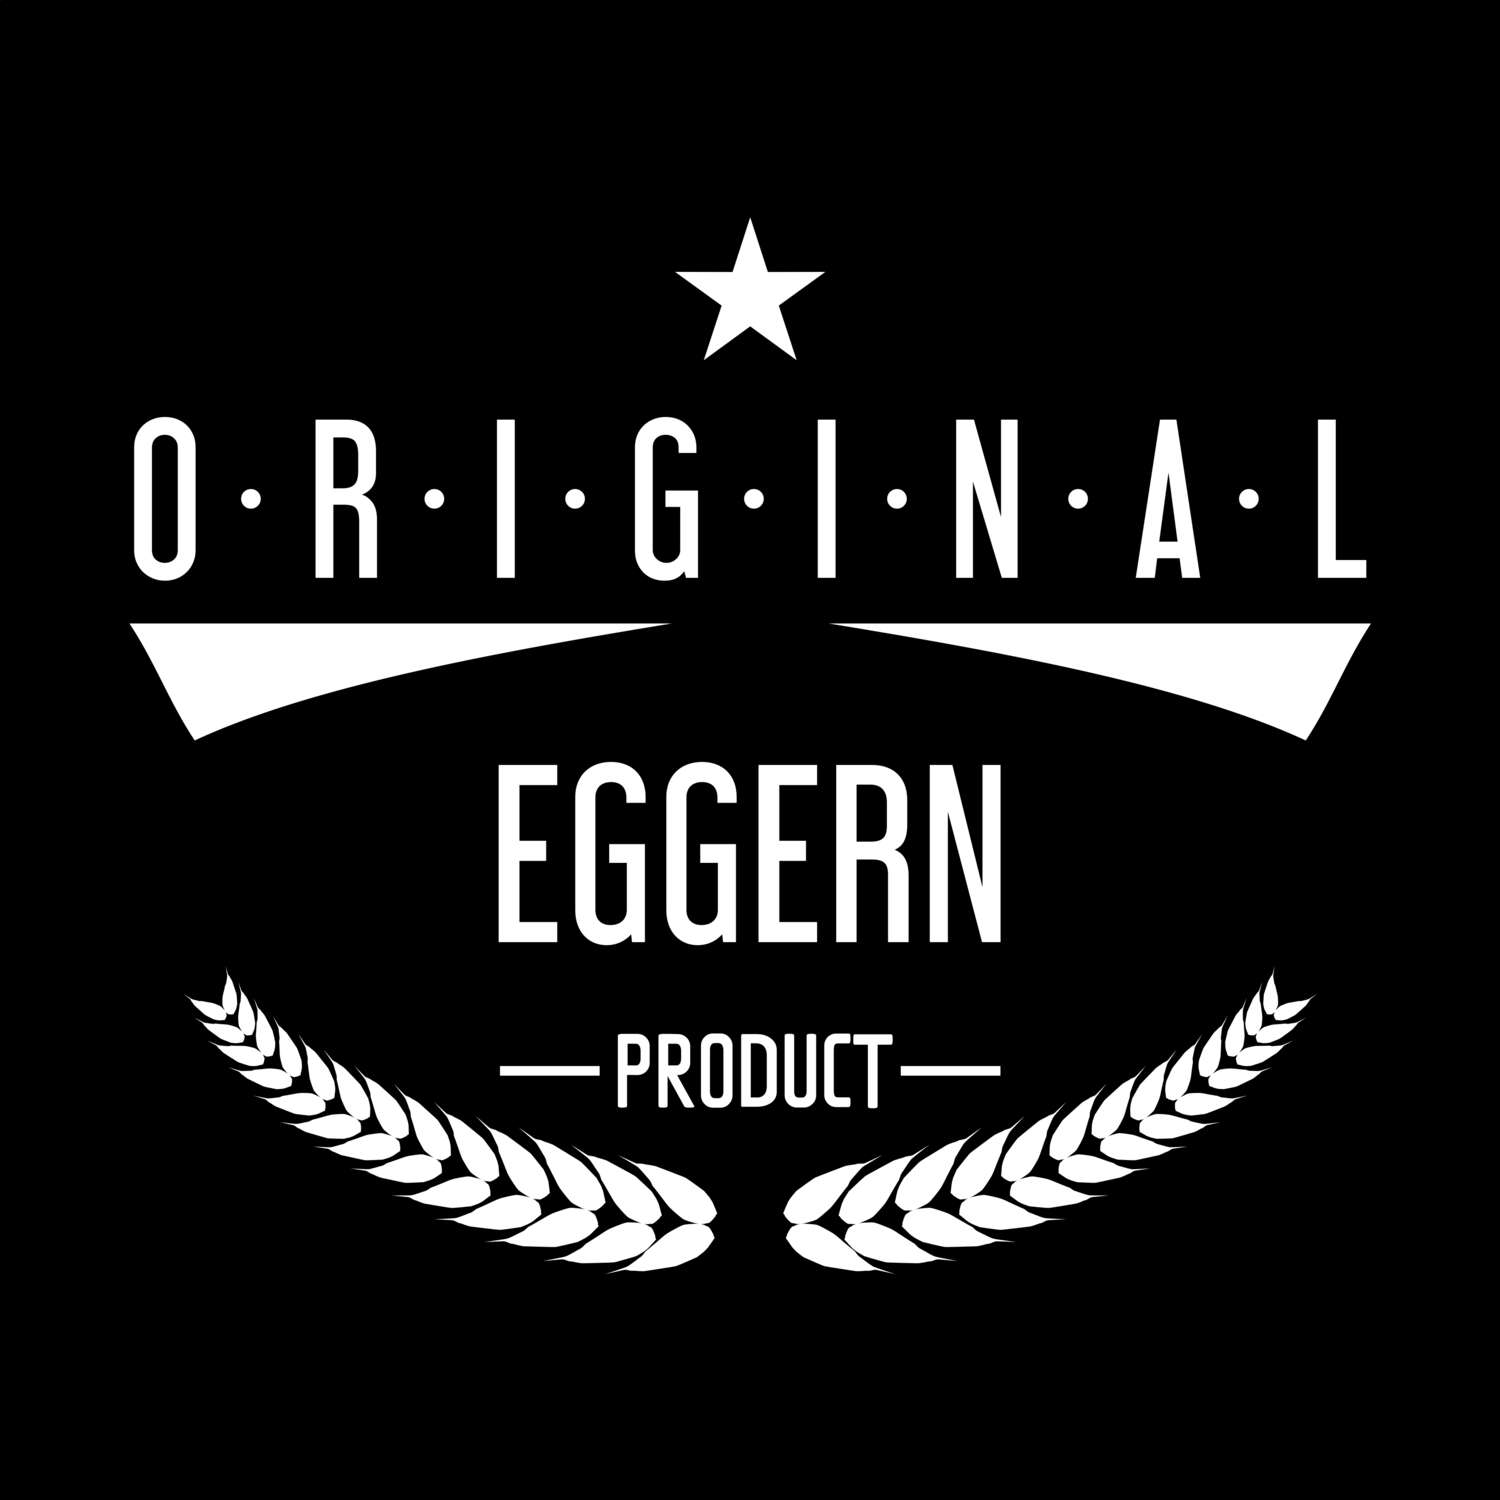 Eggern T-Shirt »Original Product«